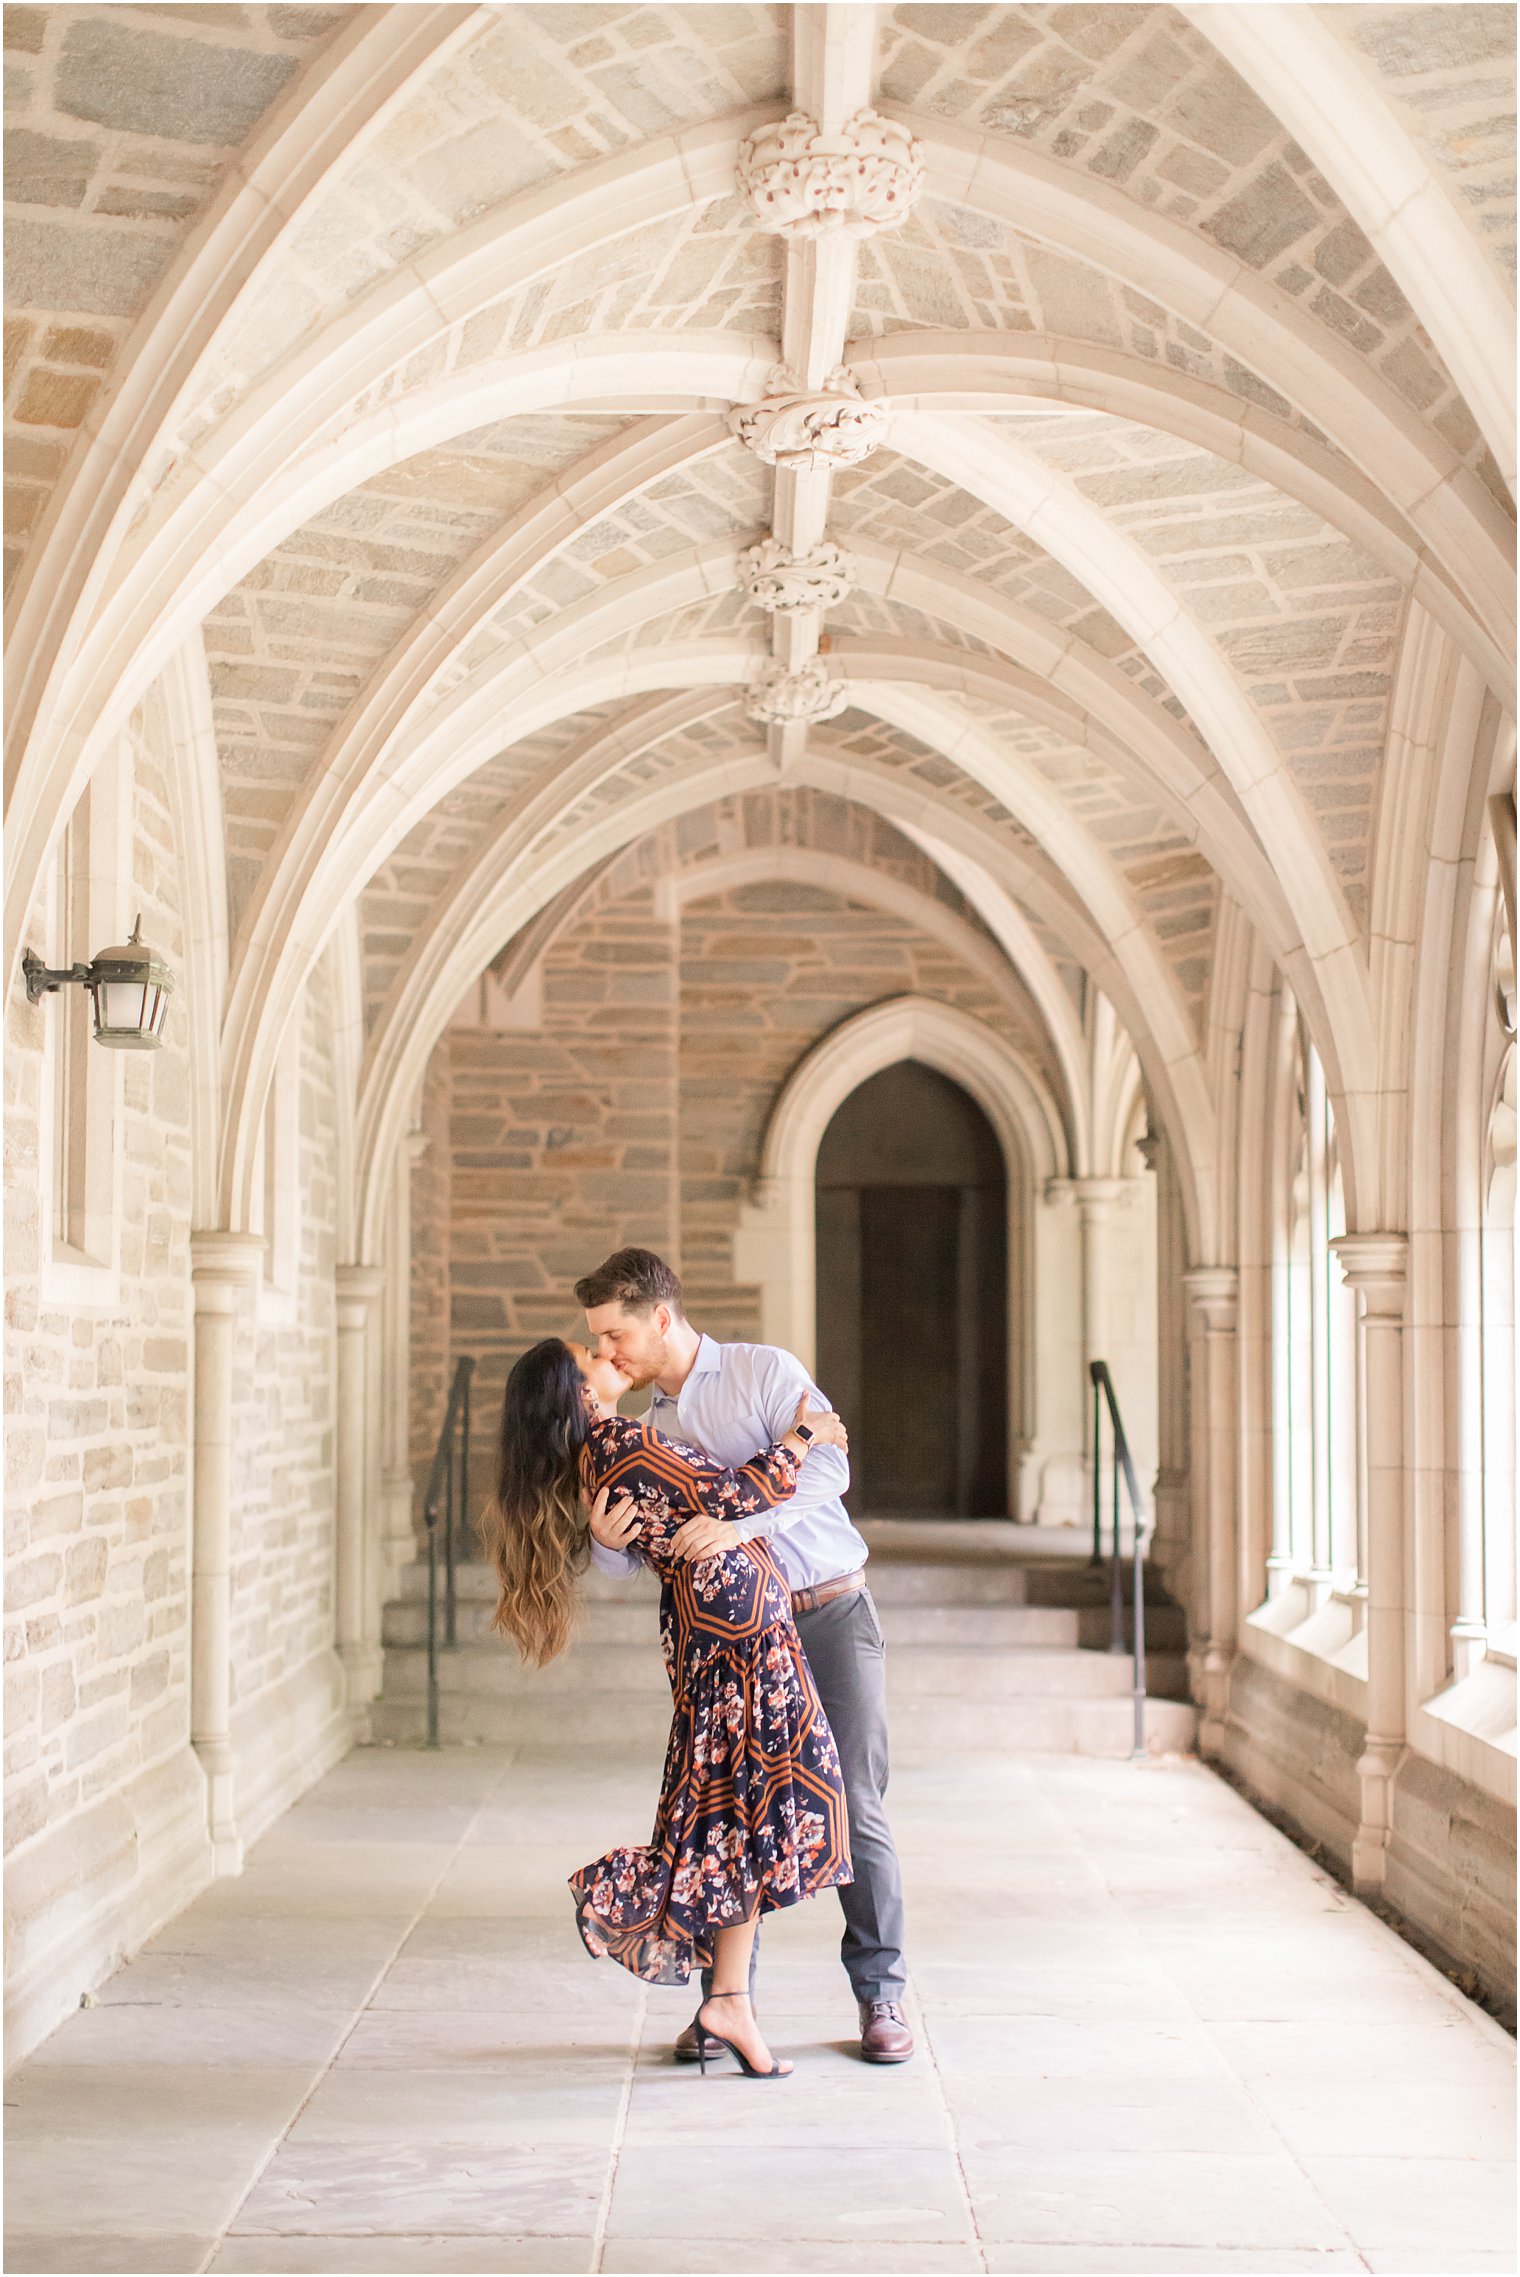 Iconic spot for engagement photos at Princeton University